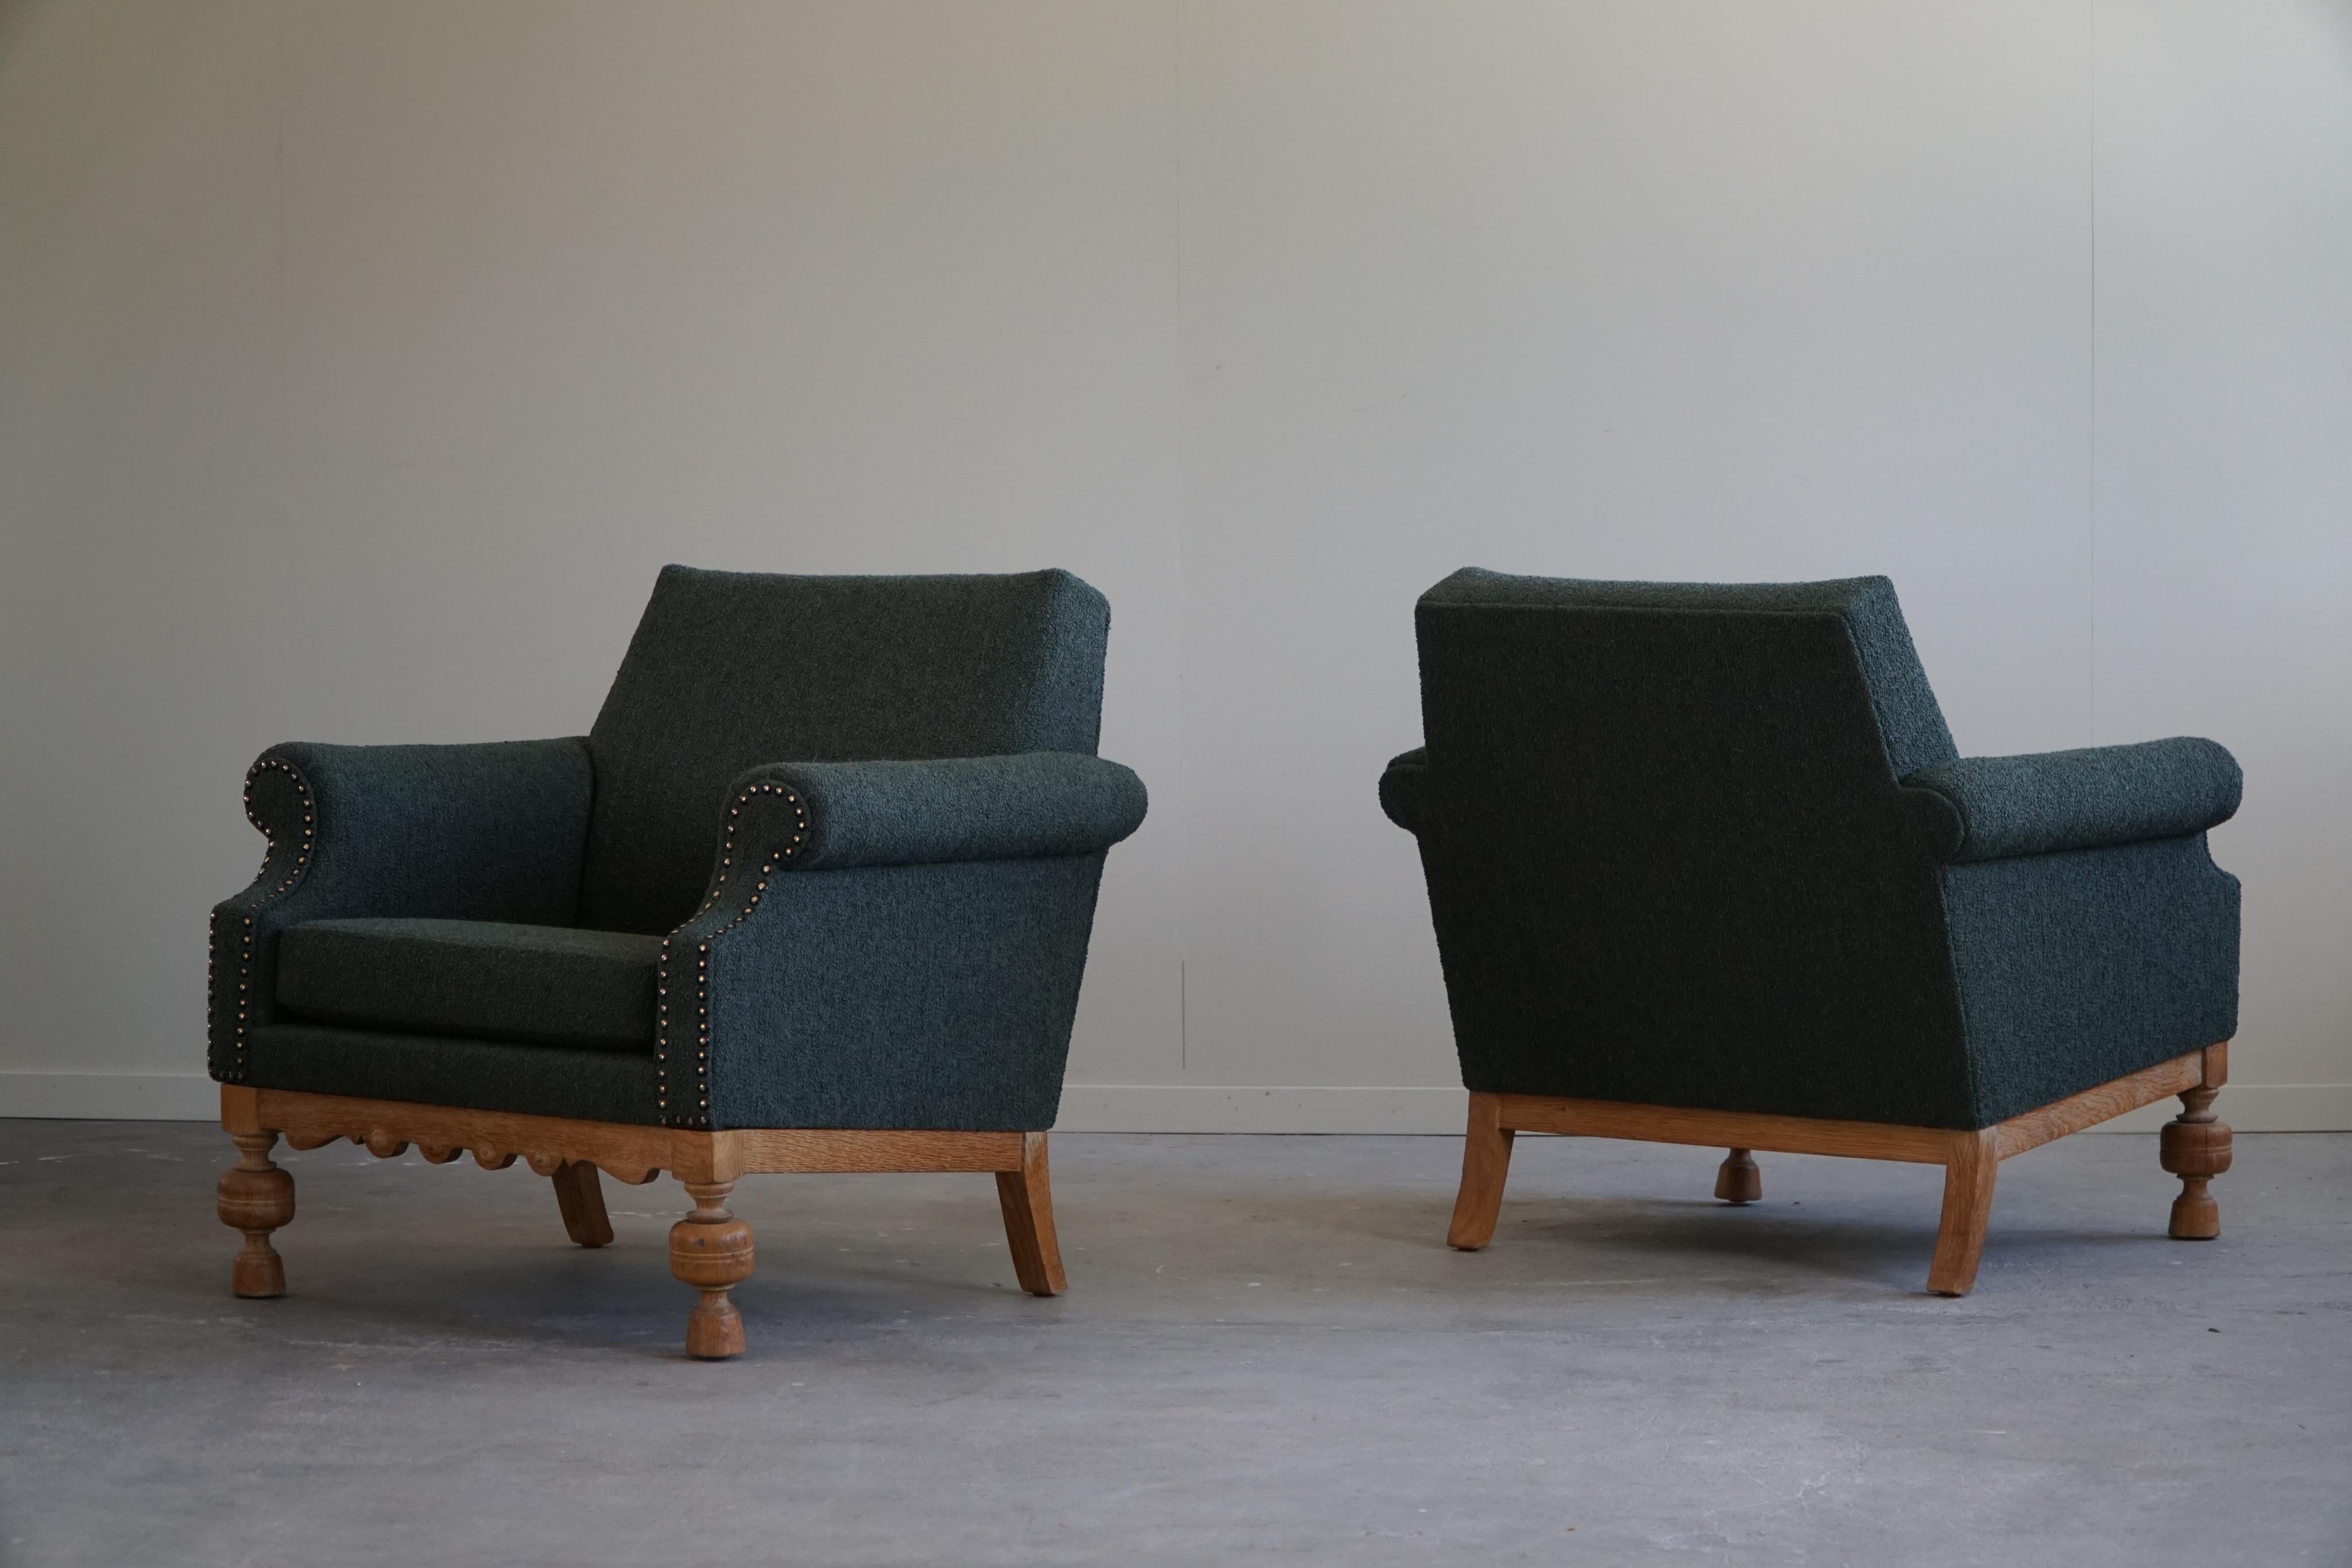 20th Century Pair of Lounge Chairs in Oak & Green Bouclé, Danish Mid-Century Modern, 1950s